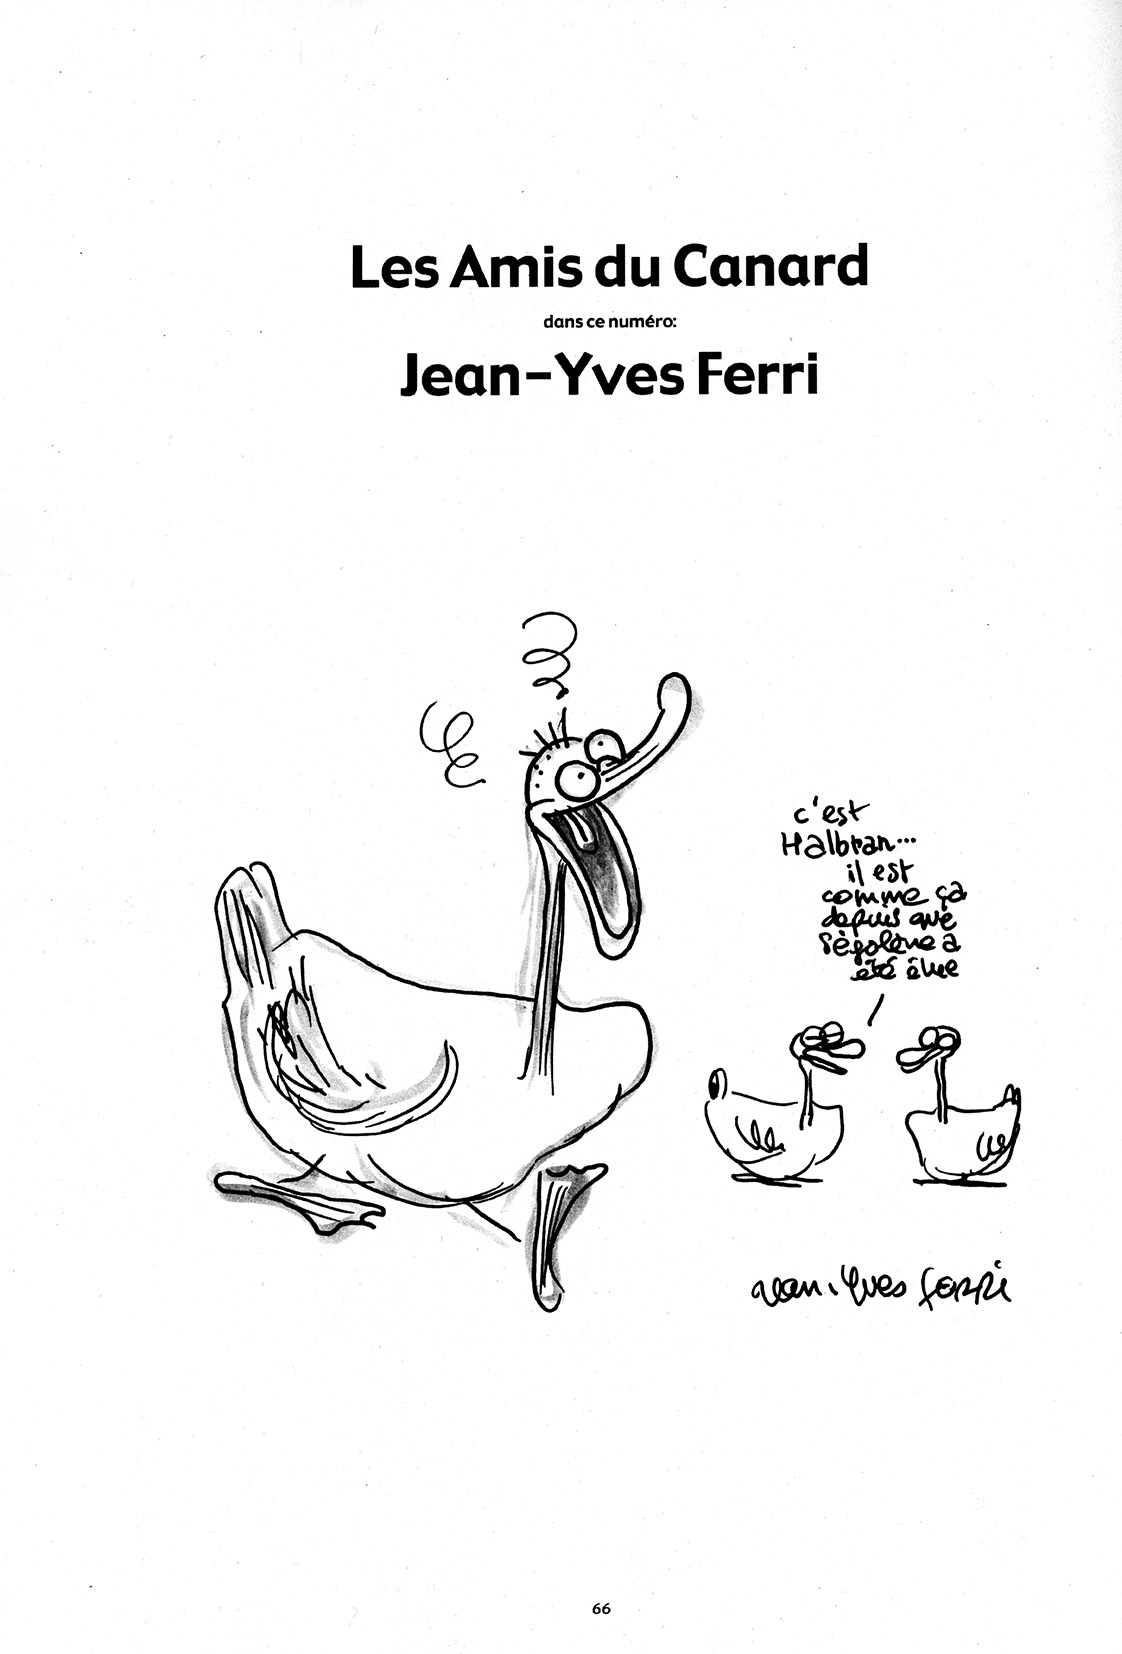 Les amis du canard: Jean-Yves Ferri